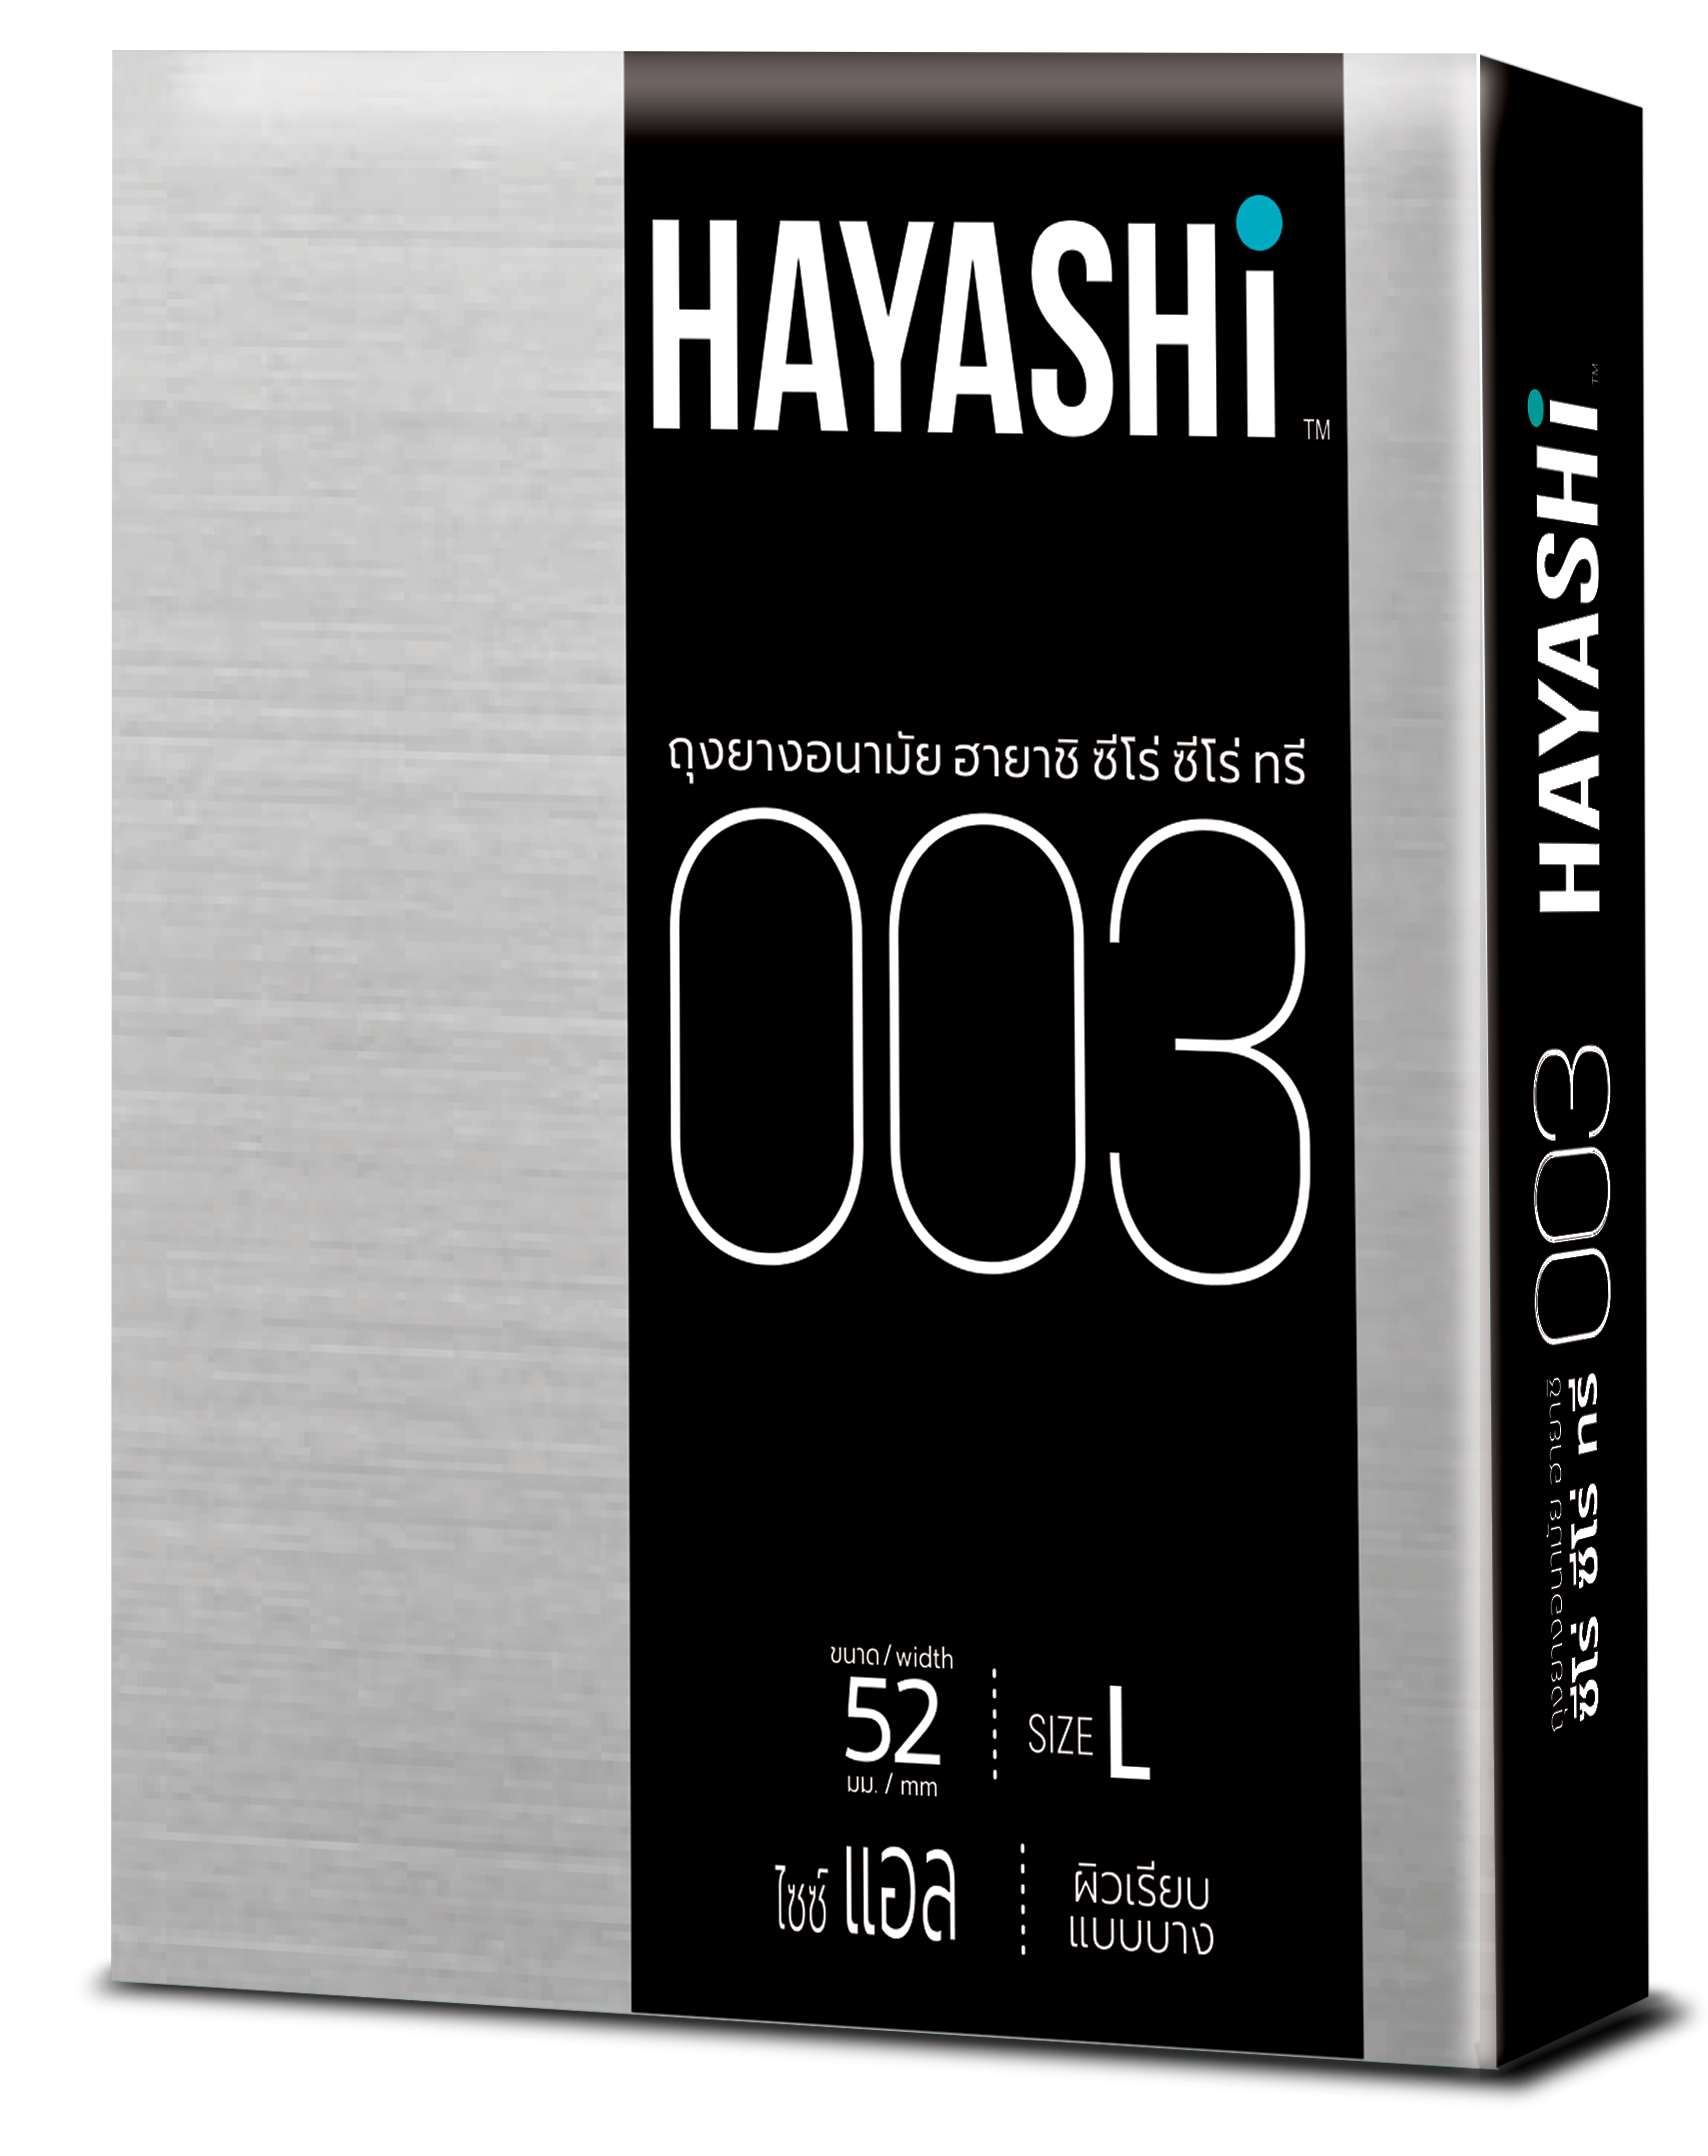 Hayashi 003